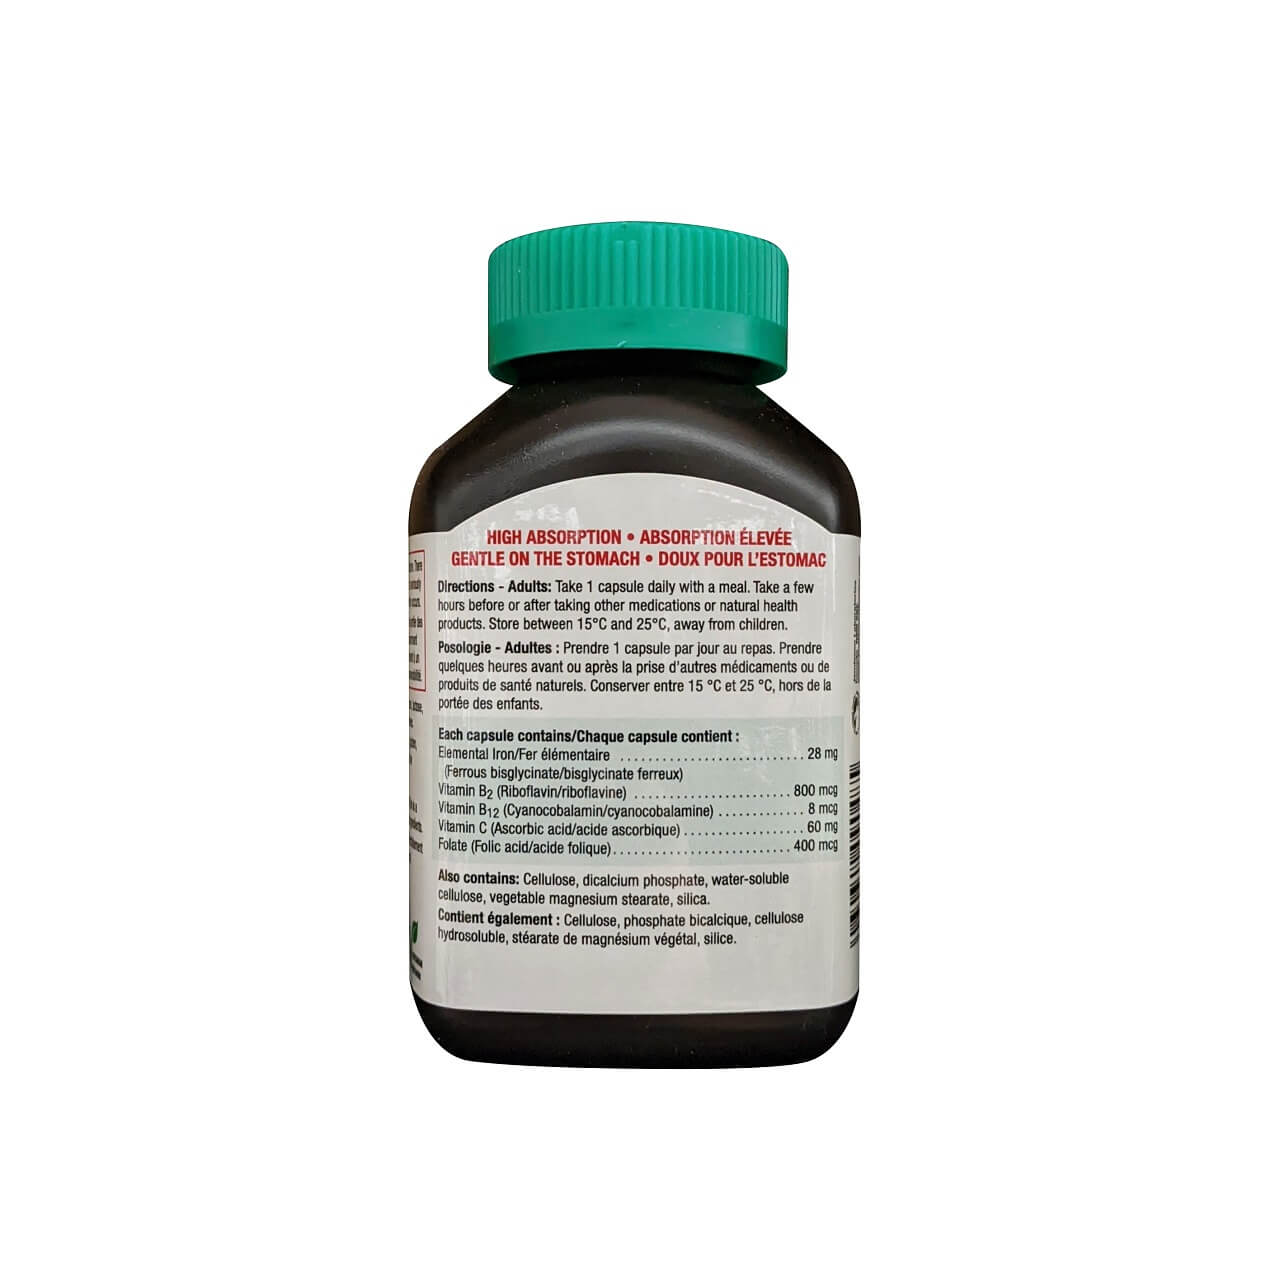 Ingredients for Jamieson Gentle Iron 28 mg (90 capsules)